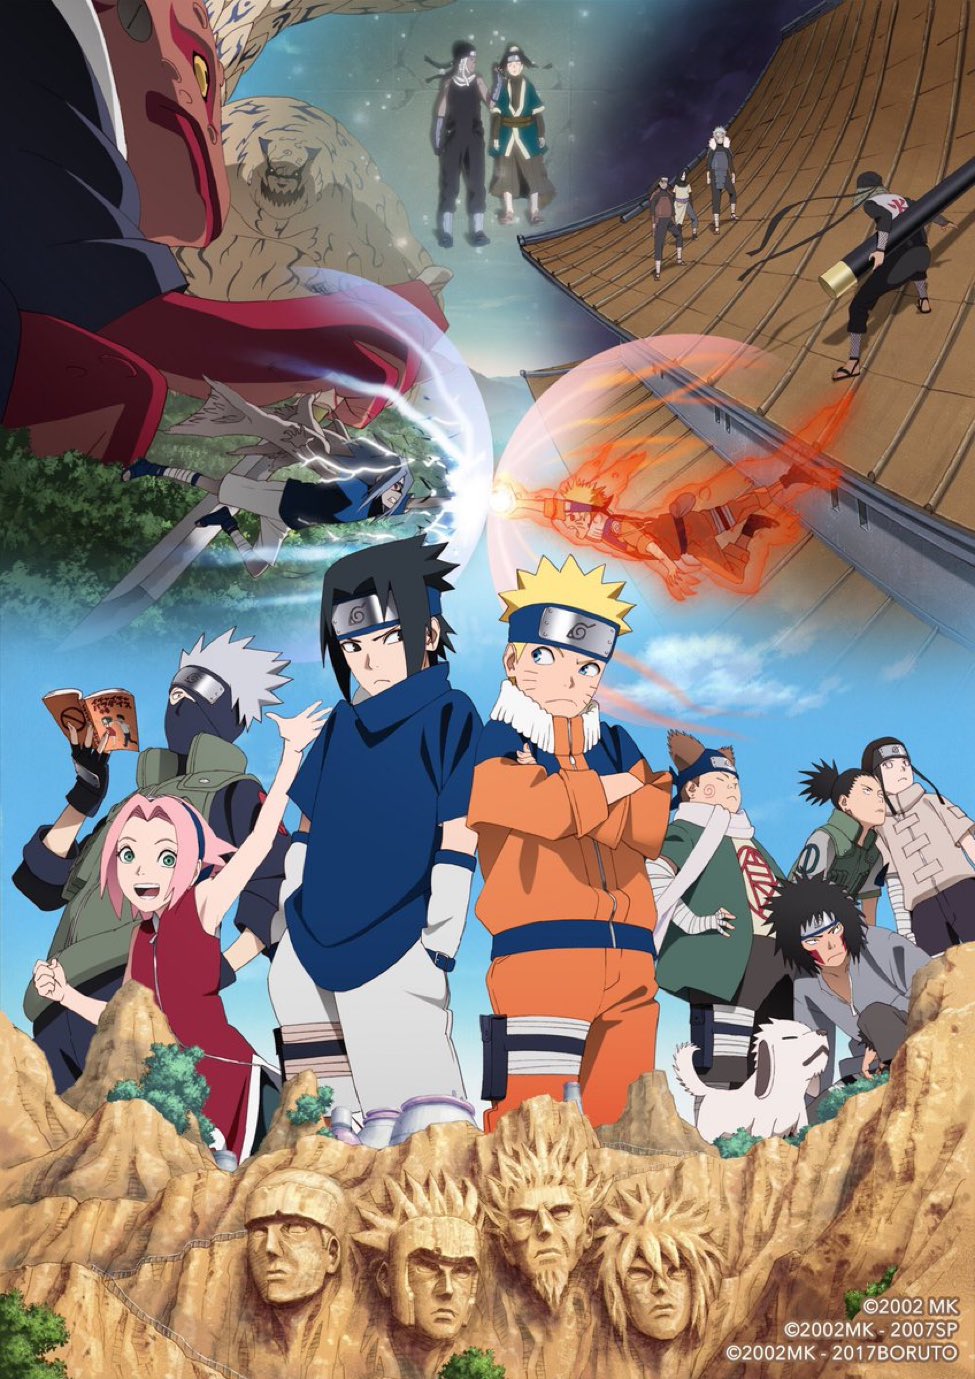 Is Naruto Shippuden a remake?